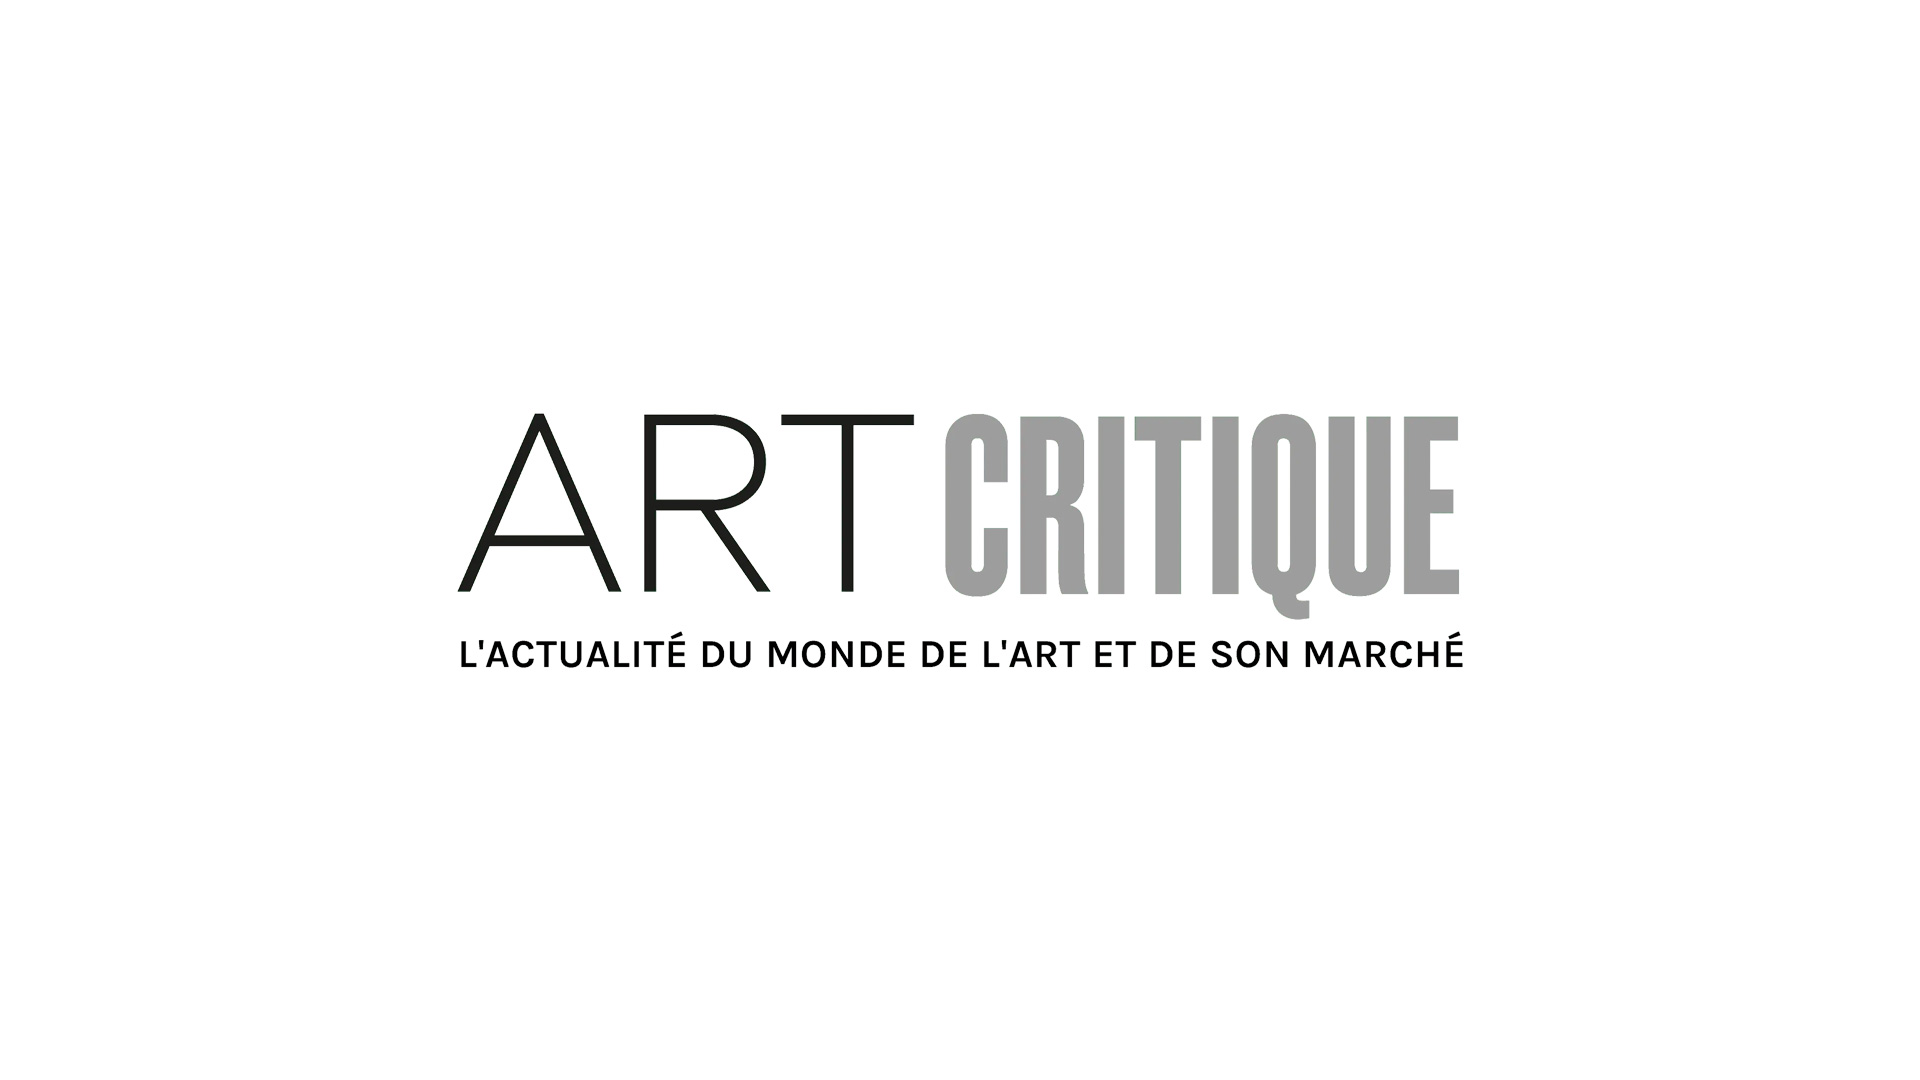 France blocks export of Cimabue masterpiece found in kitchen